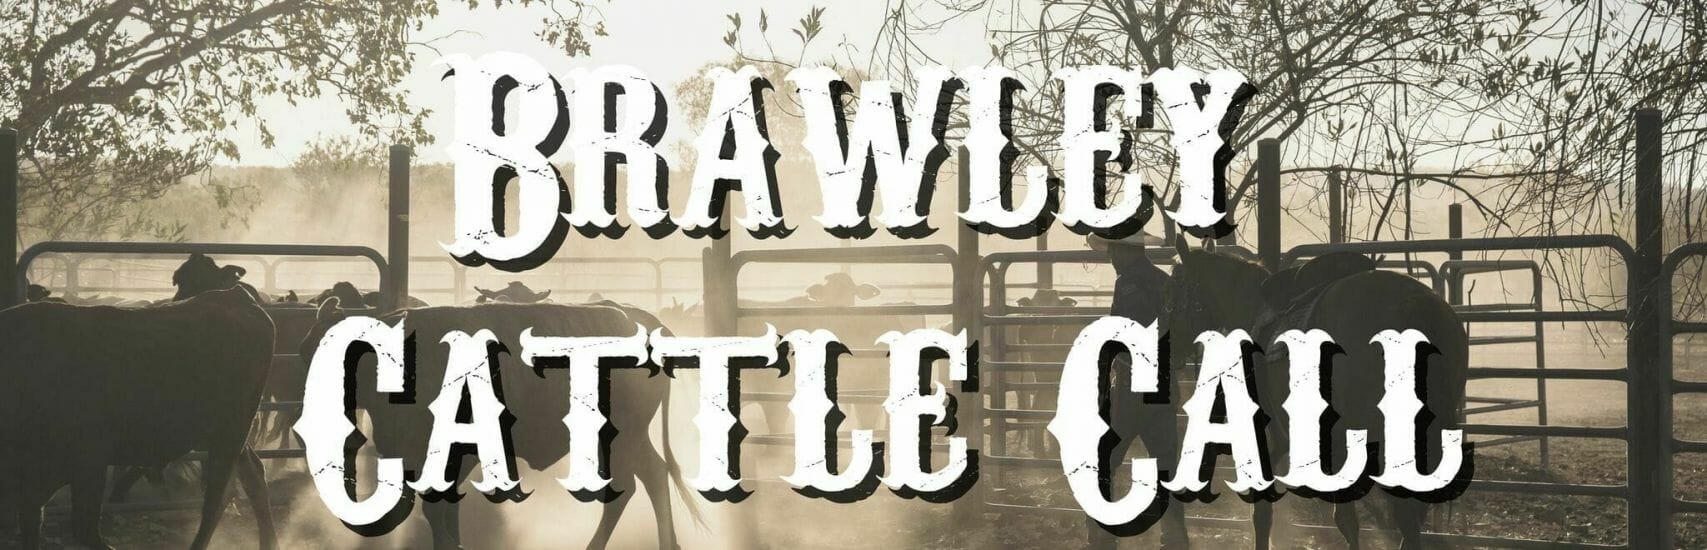 Brawley Cattle Call Brawley Chamber of Commerce